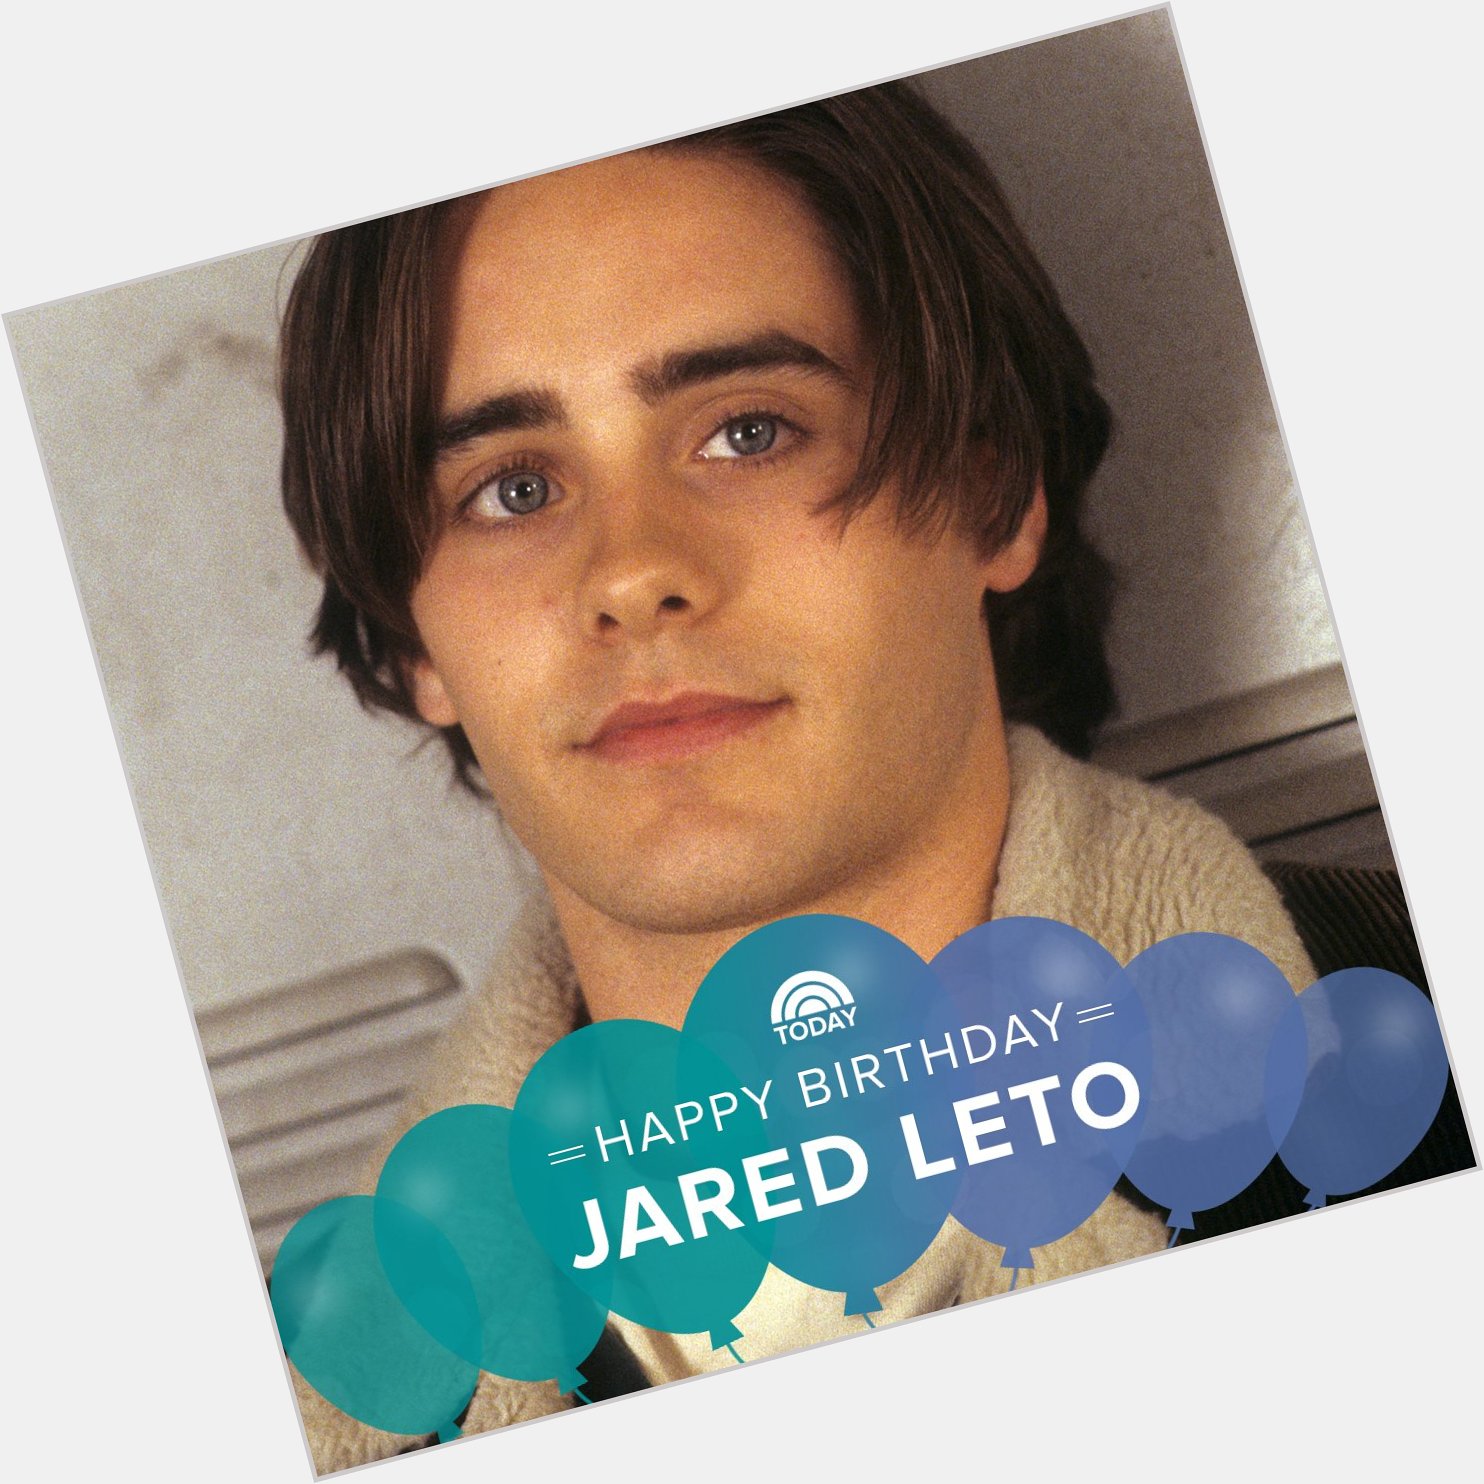 Happy birthday, Jared Leto!  